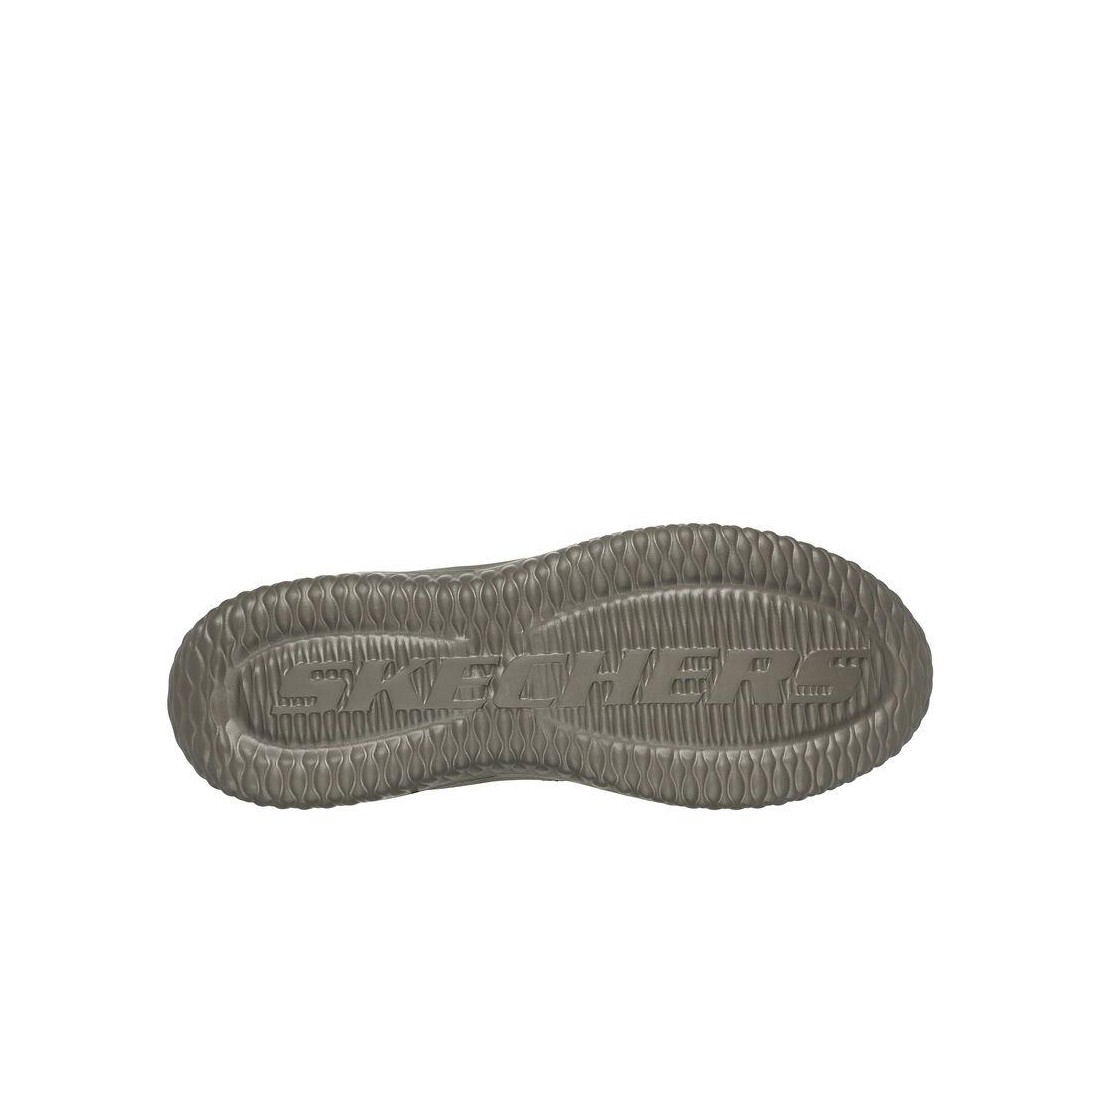 Giày Skechers Delson 3.0 - Glavine Nam Nâu